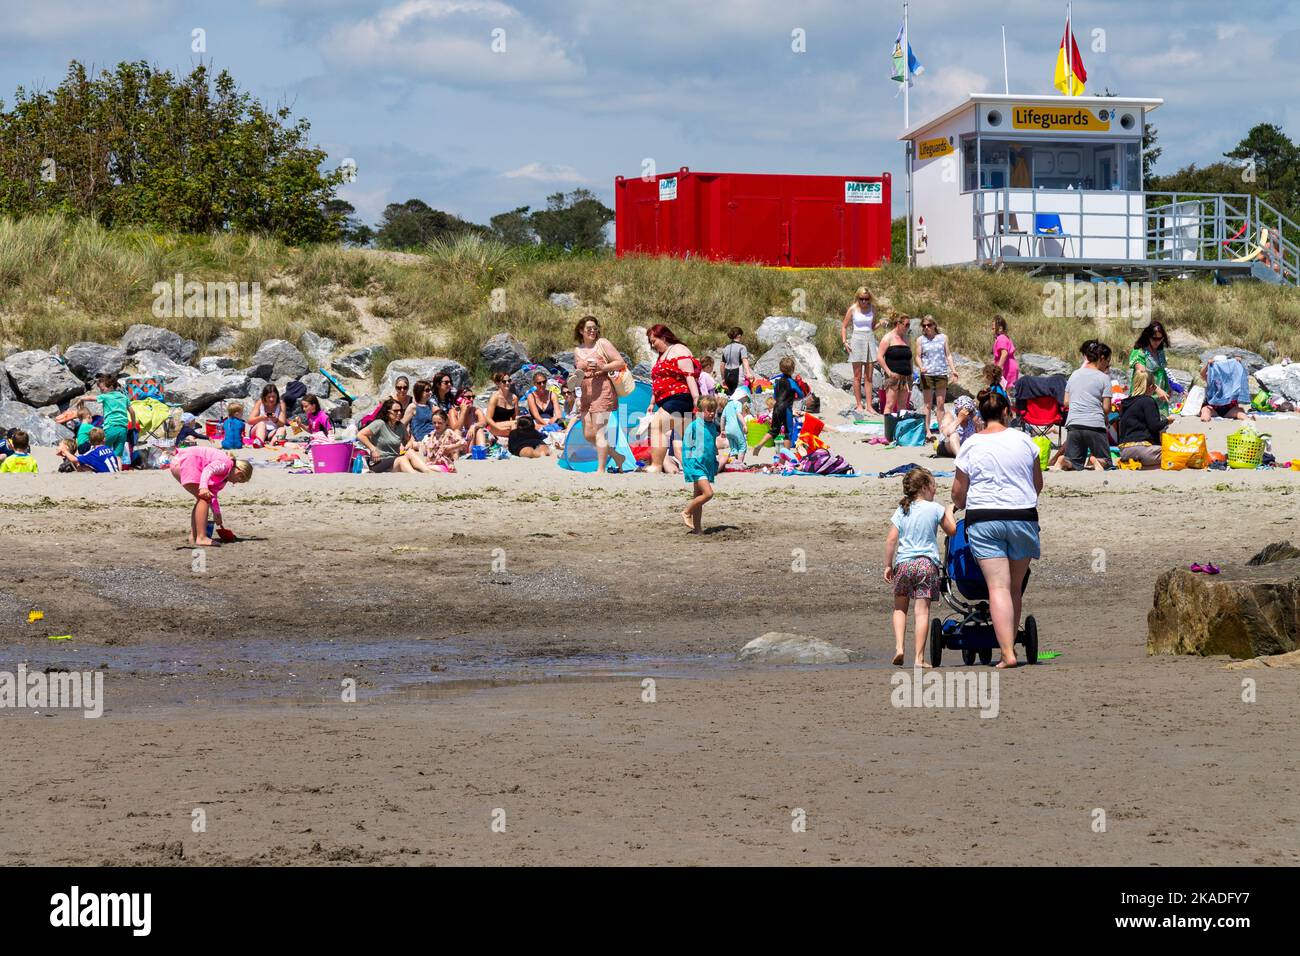 Lifeguard station watching families enjoying holiday on the beach Stock Photo